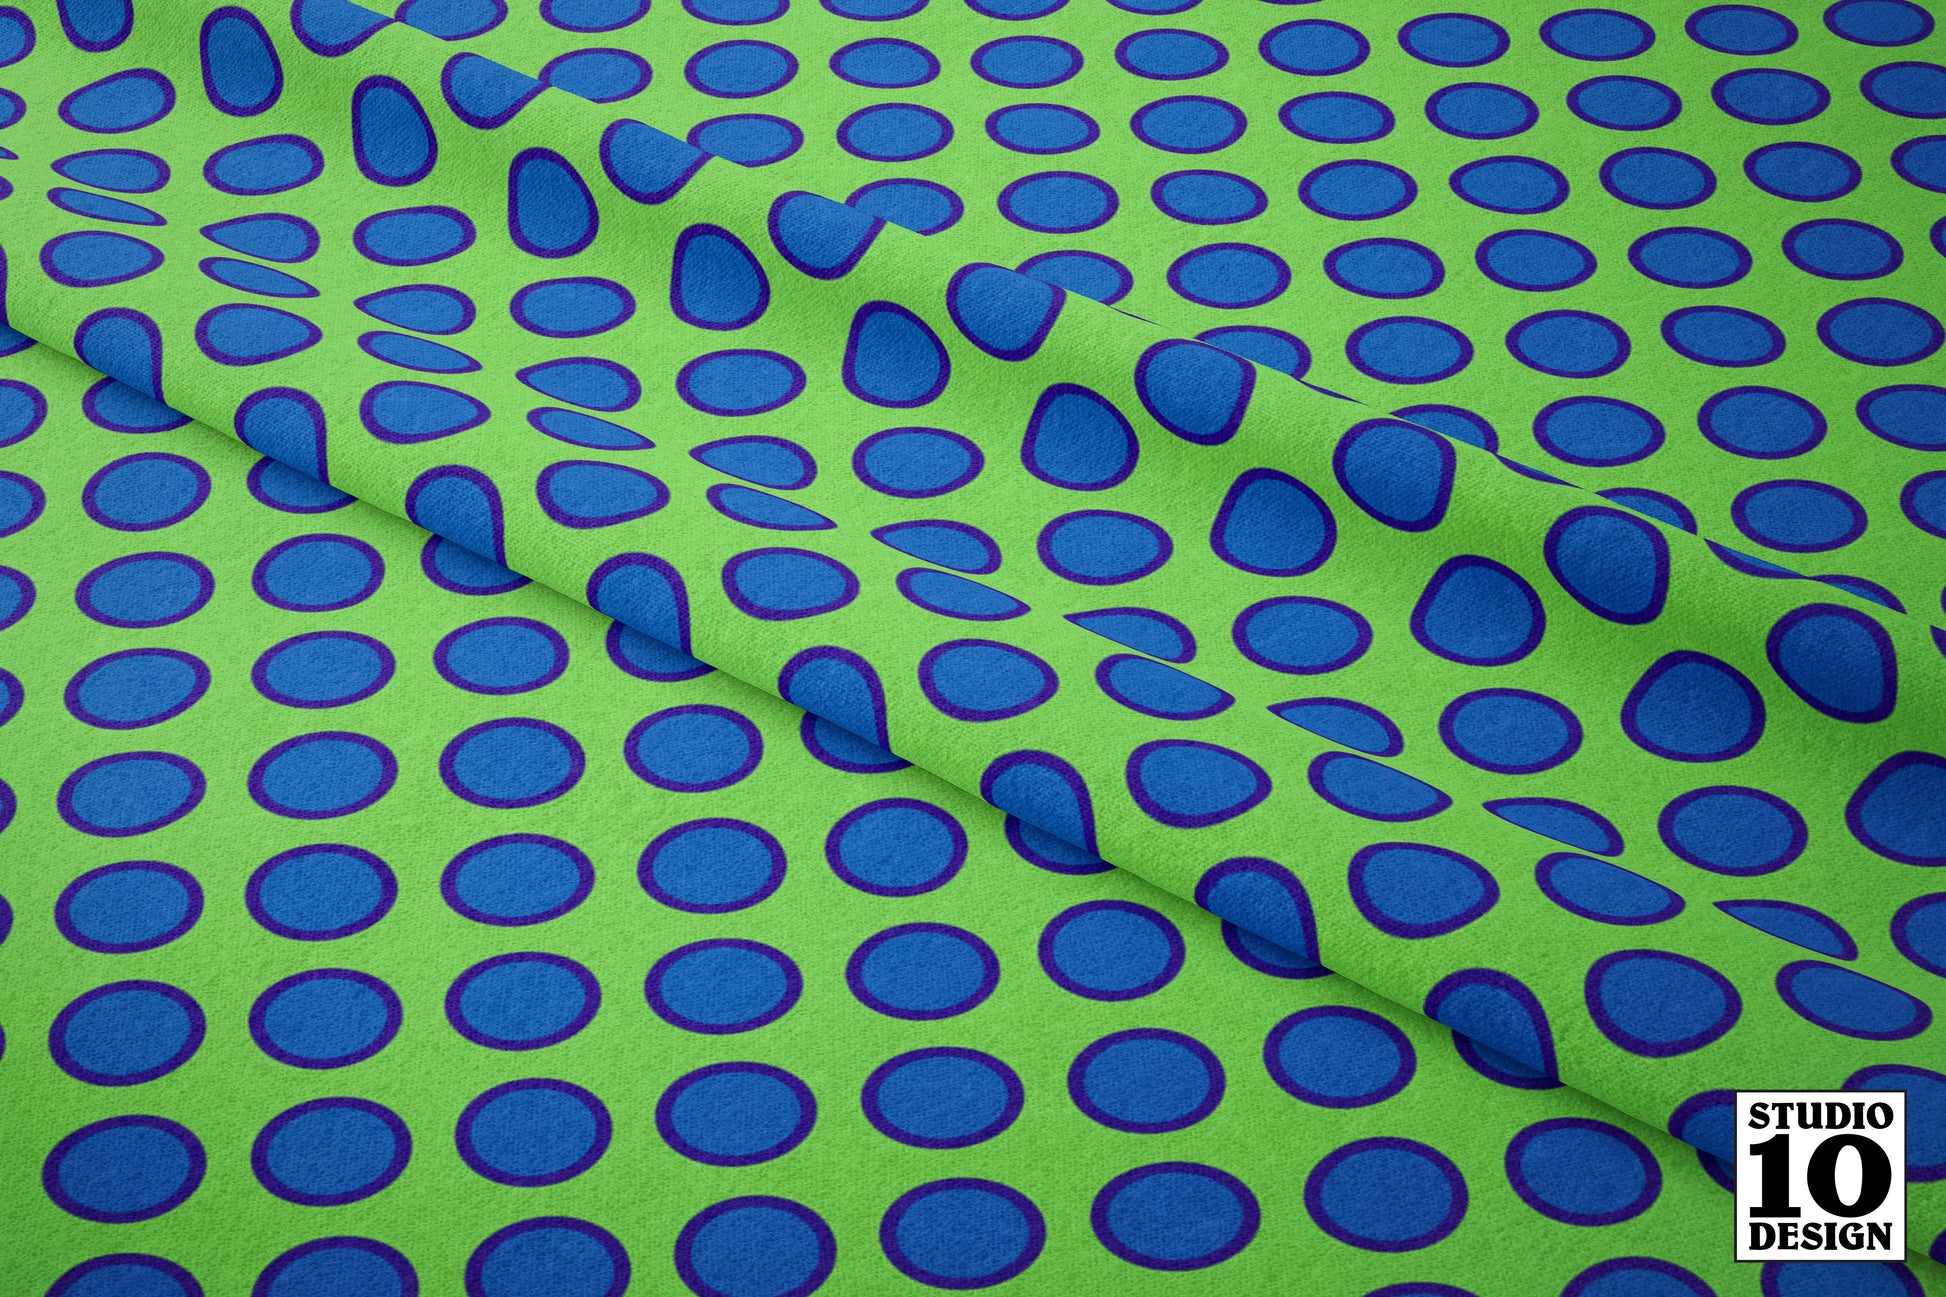 Dark Blue Dots on Green Printed Fabric by Studio Ten Design